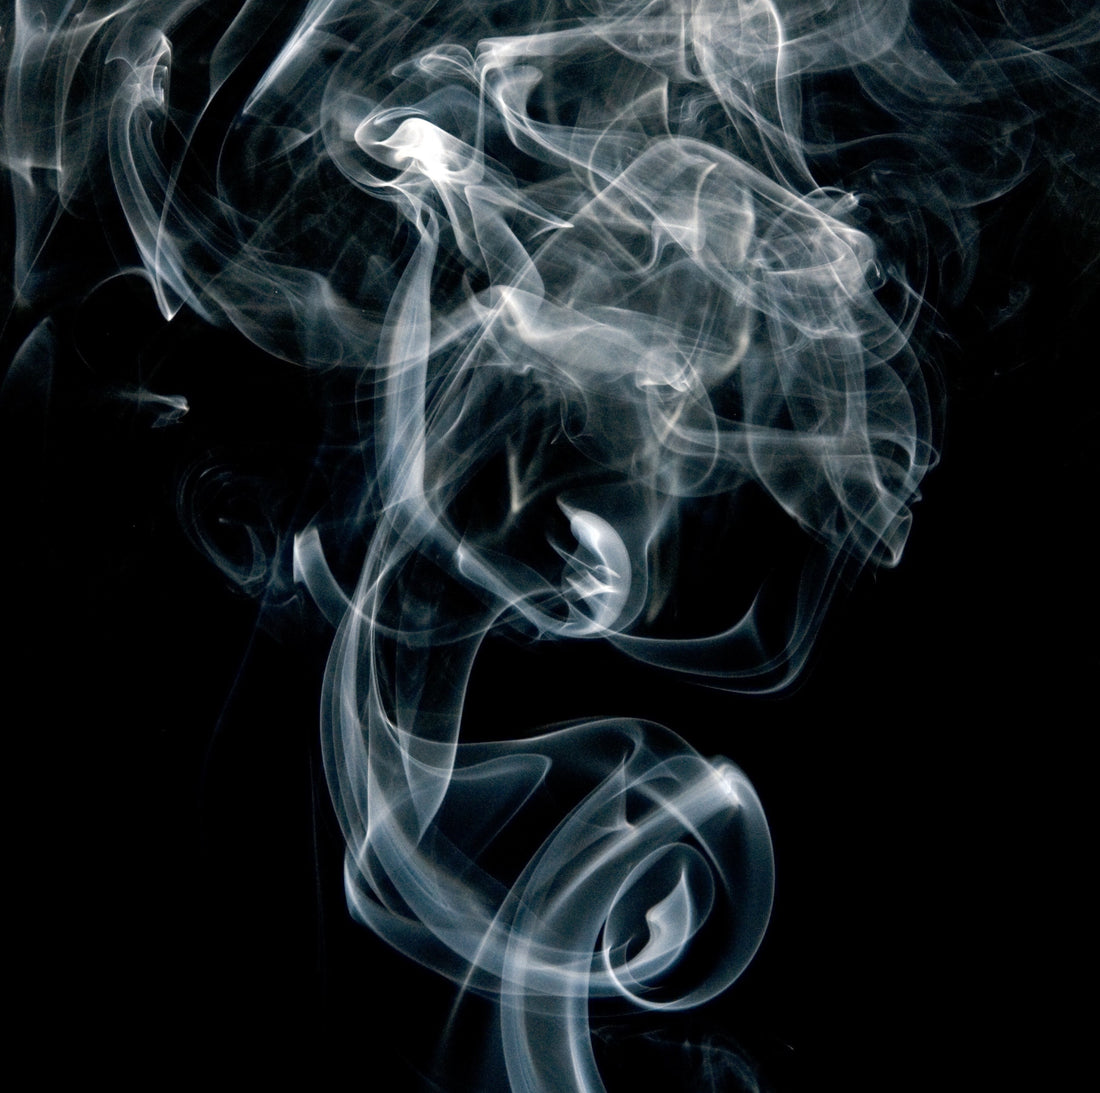 Plume of smoke